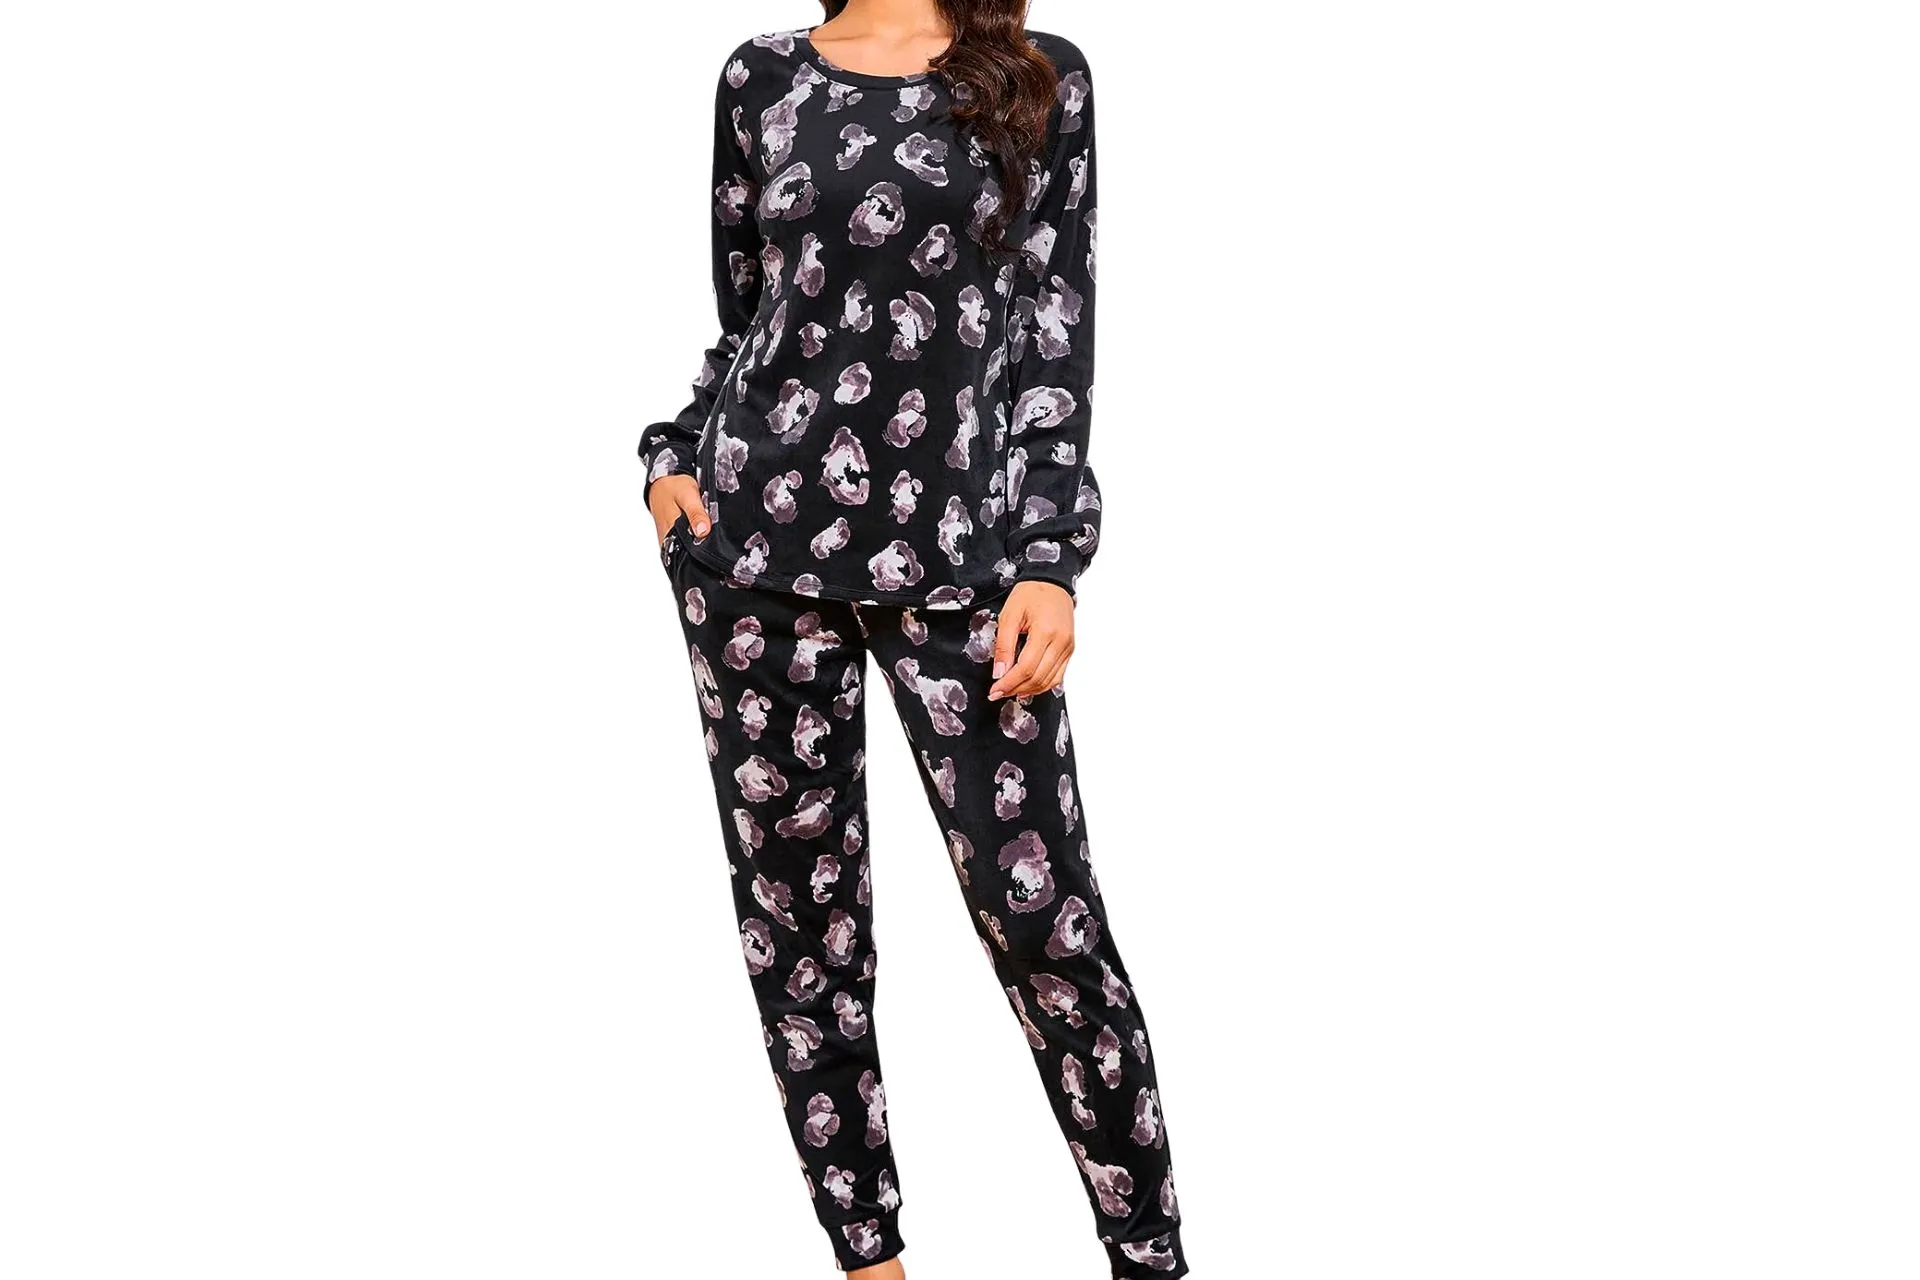 IZZY + TOBY Women's Sleepwear Tops with Capri Pants Pajama Sets